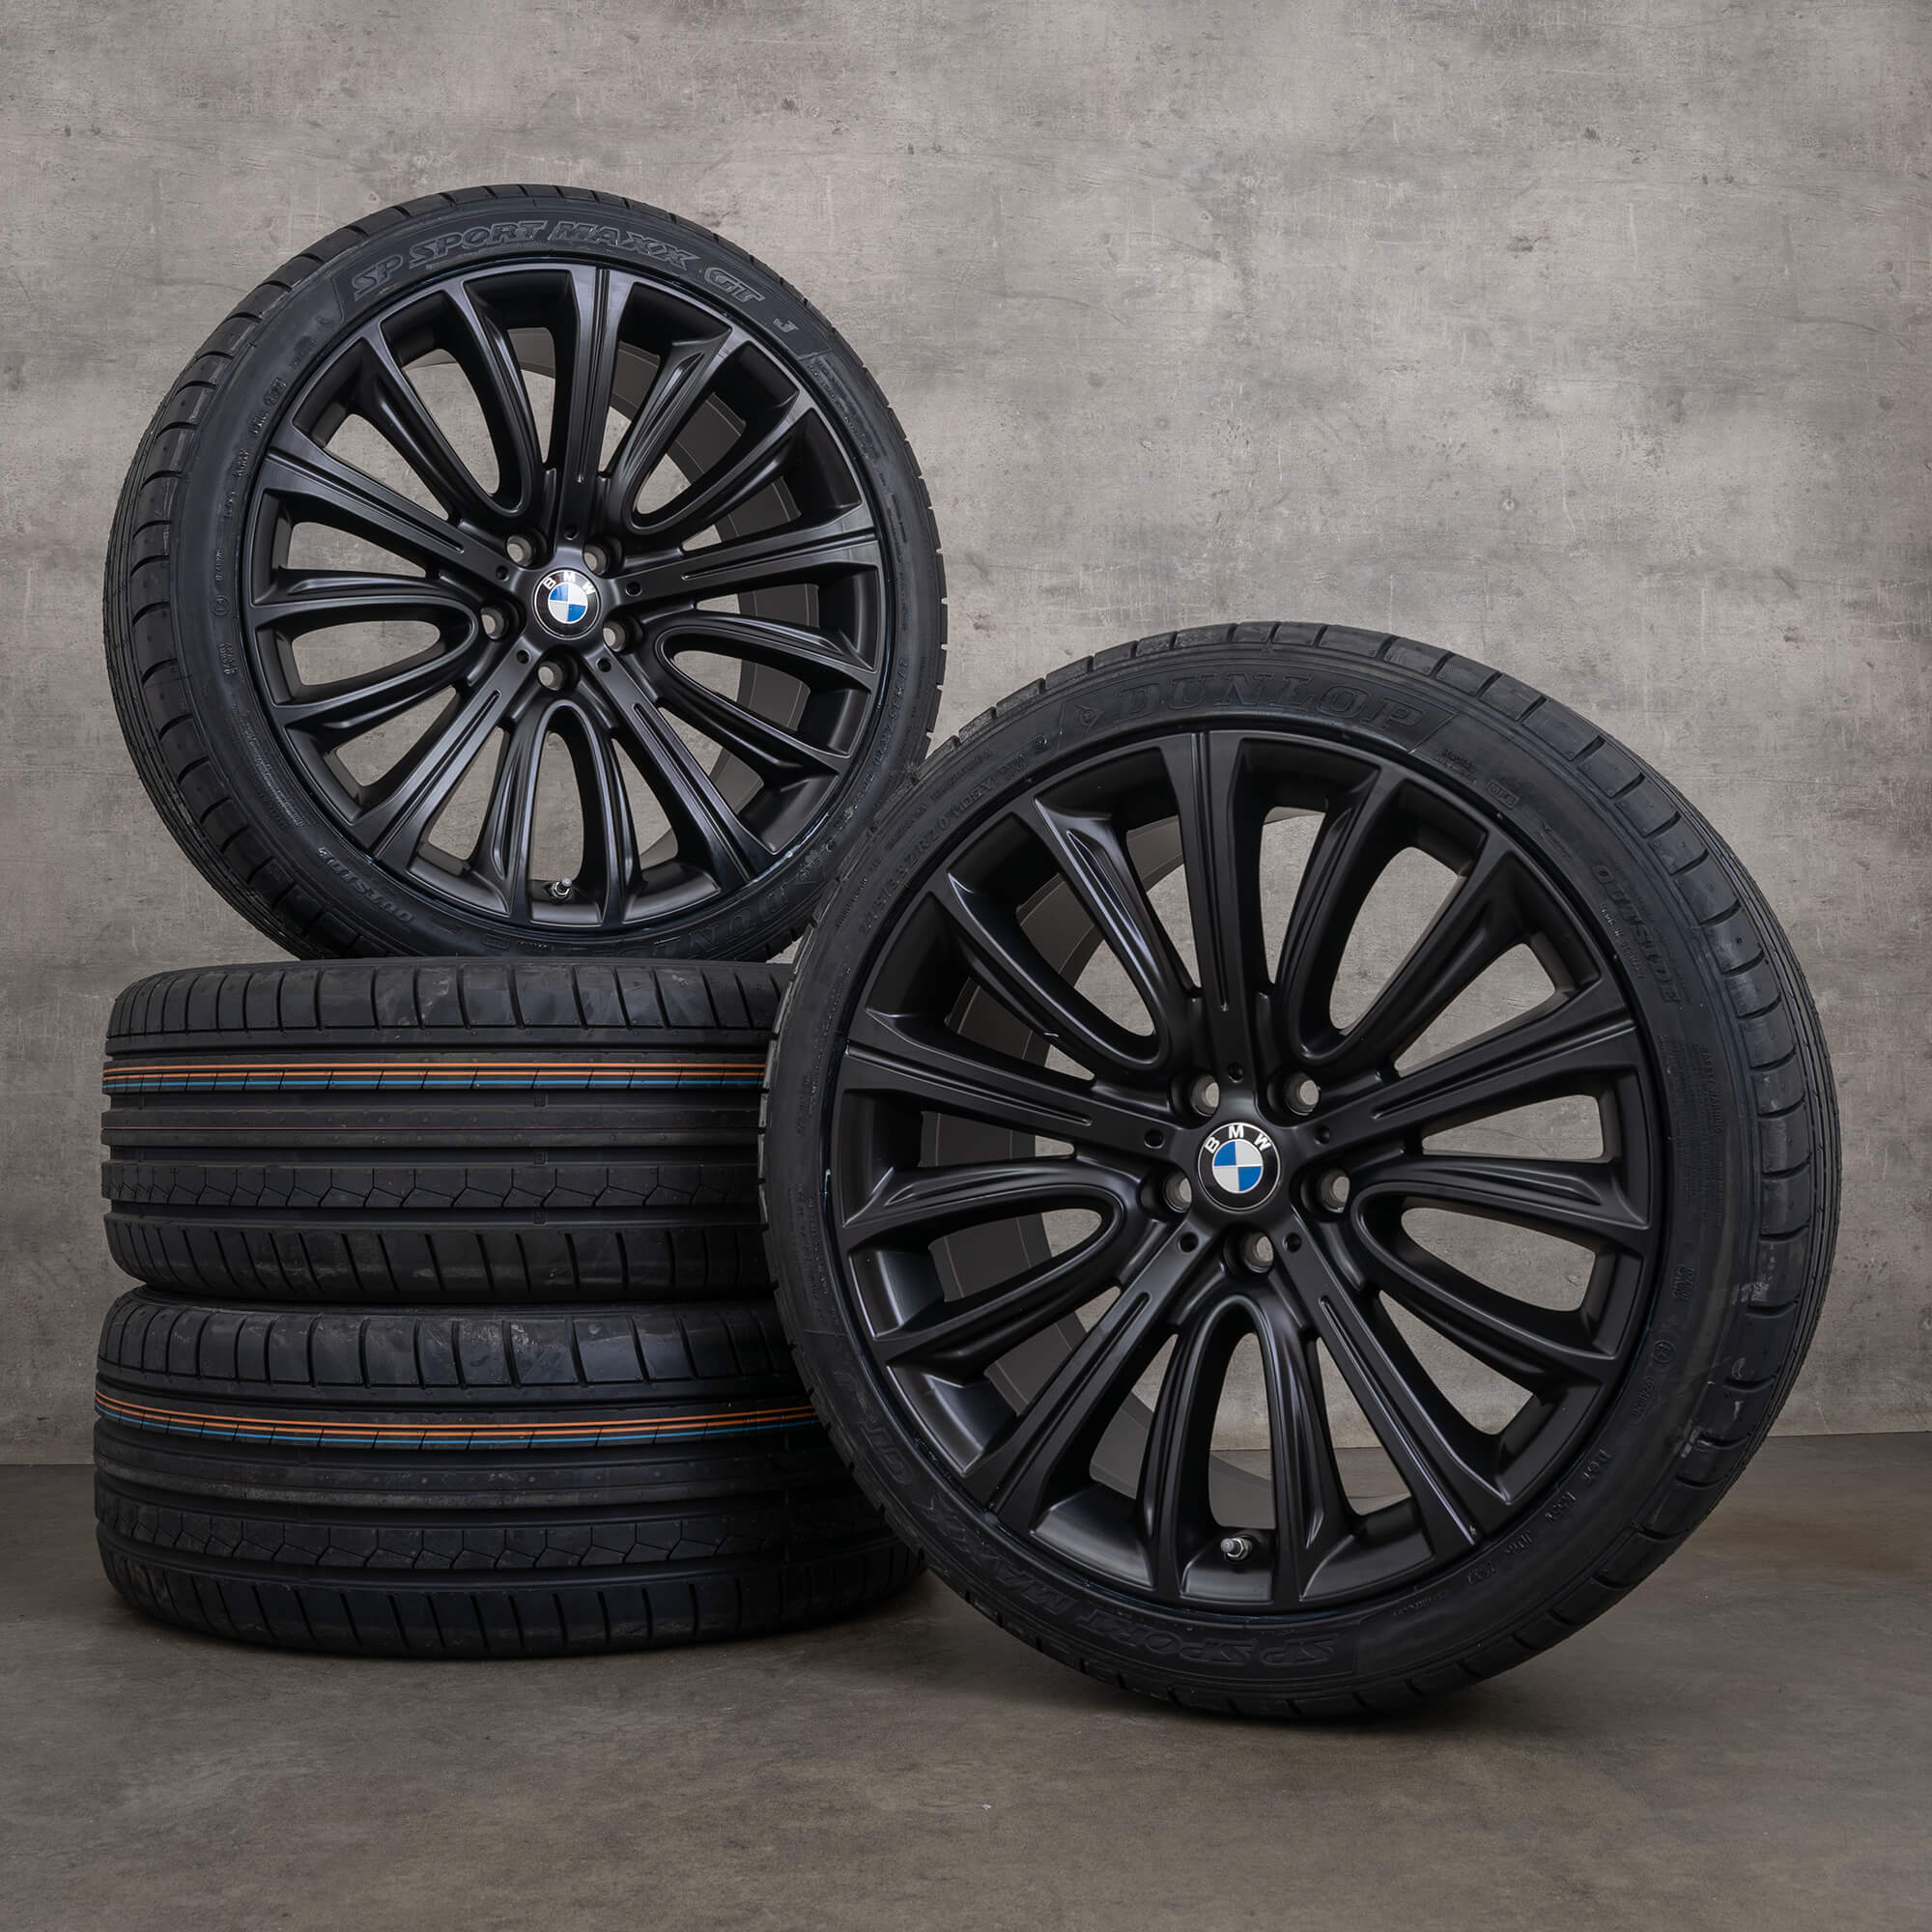 BMW 6 Series GT G32 7 G11 G12 summer wheels 20 inch rims 628 tires aluminum